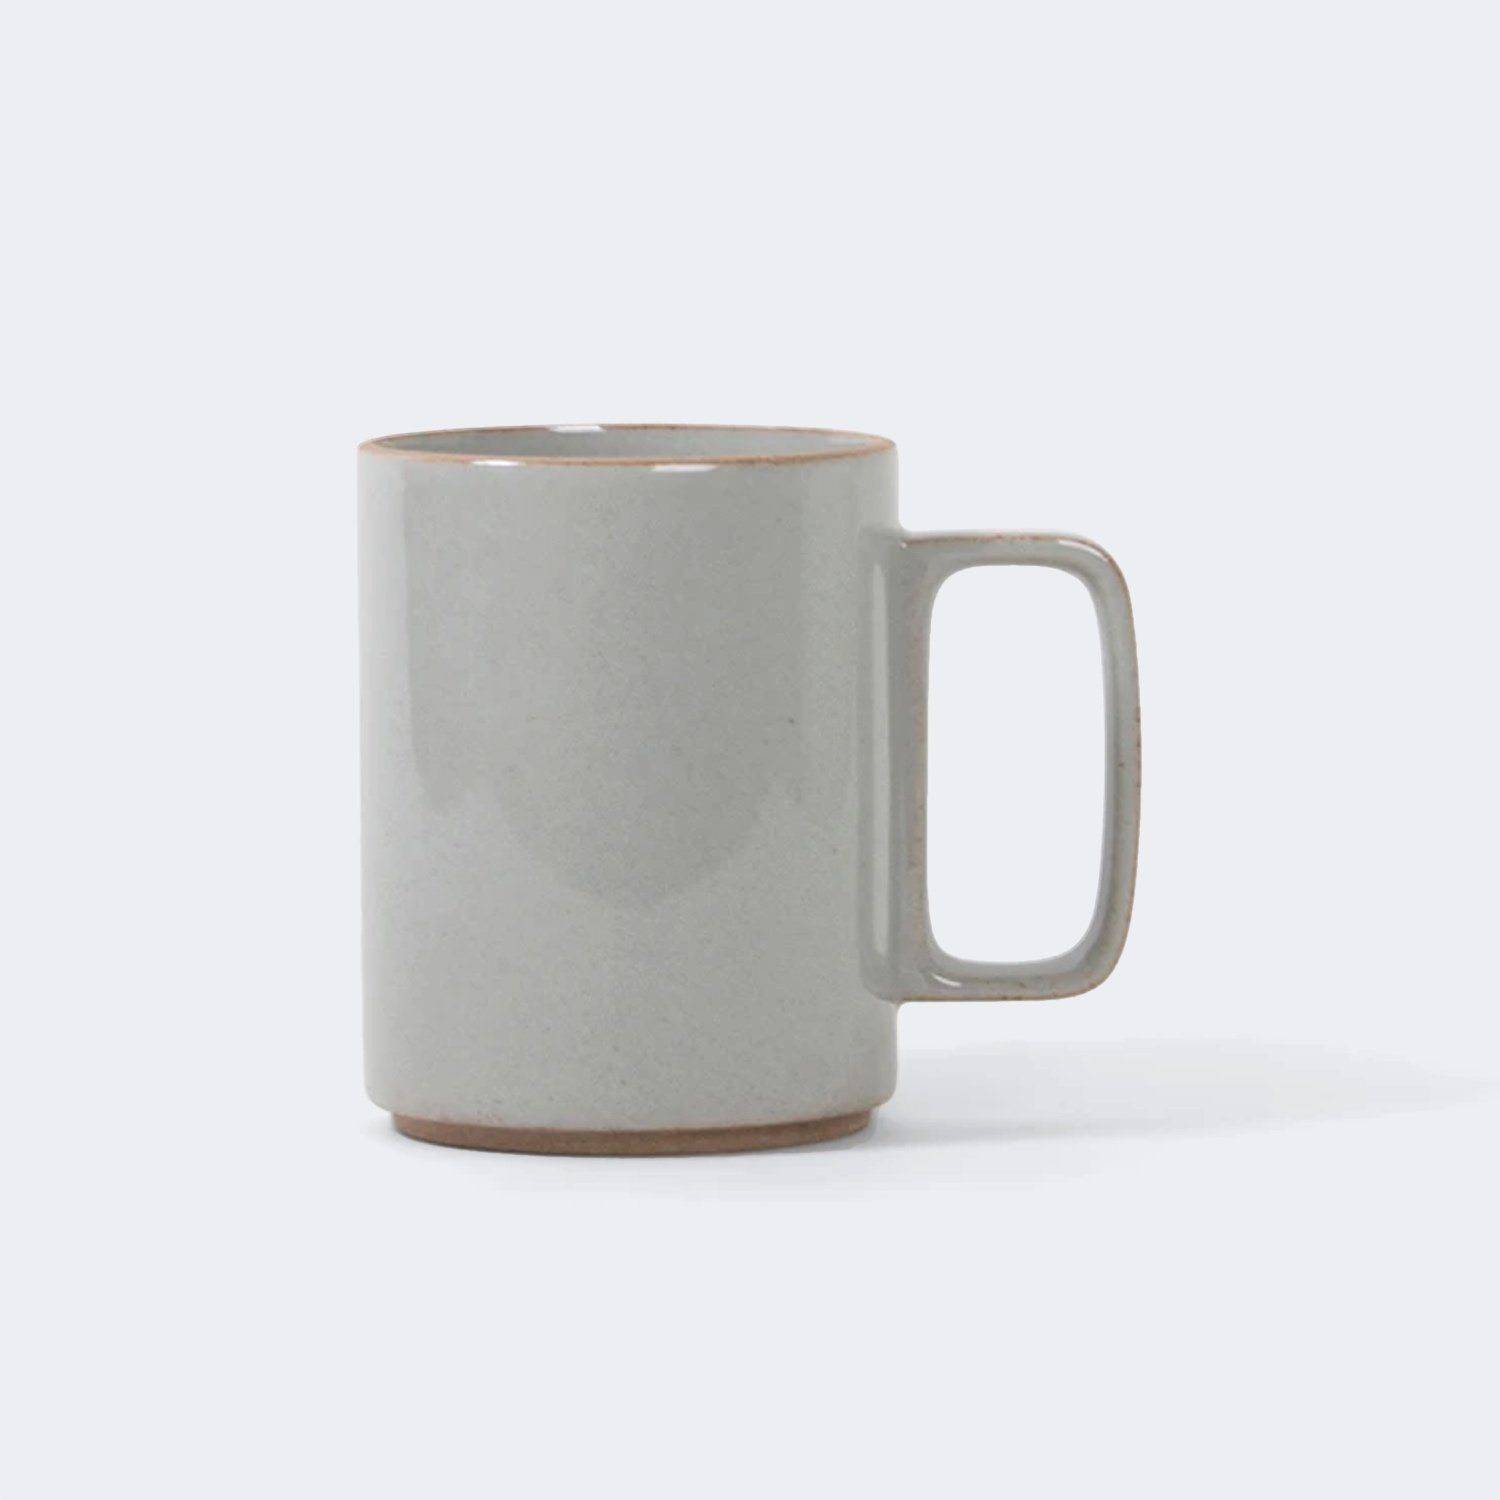 Hasami Porcelain Mug in Gloss Gray 15 oz. - KANSO#select size_15 oz.